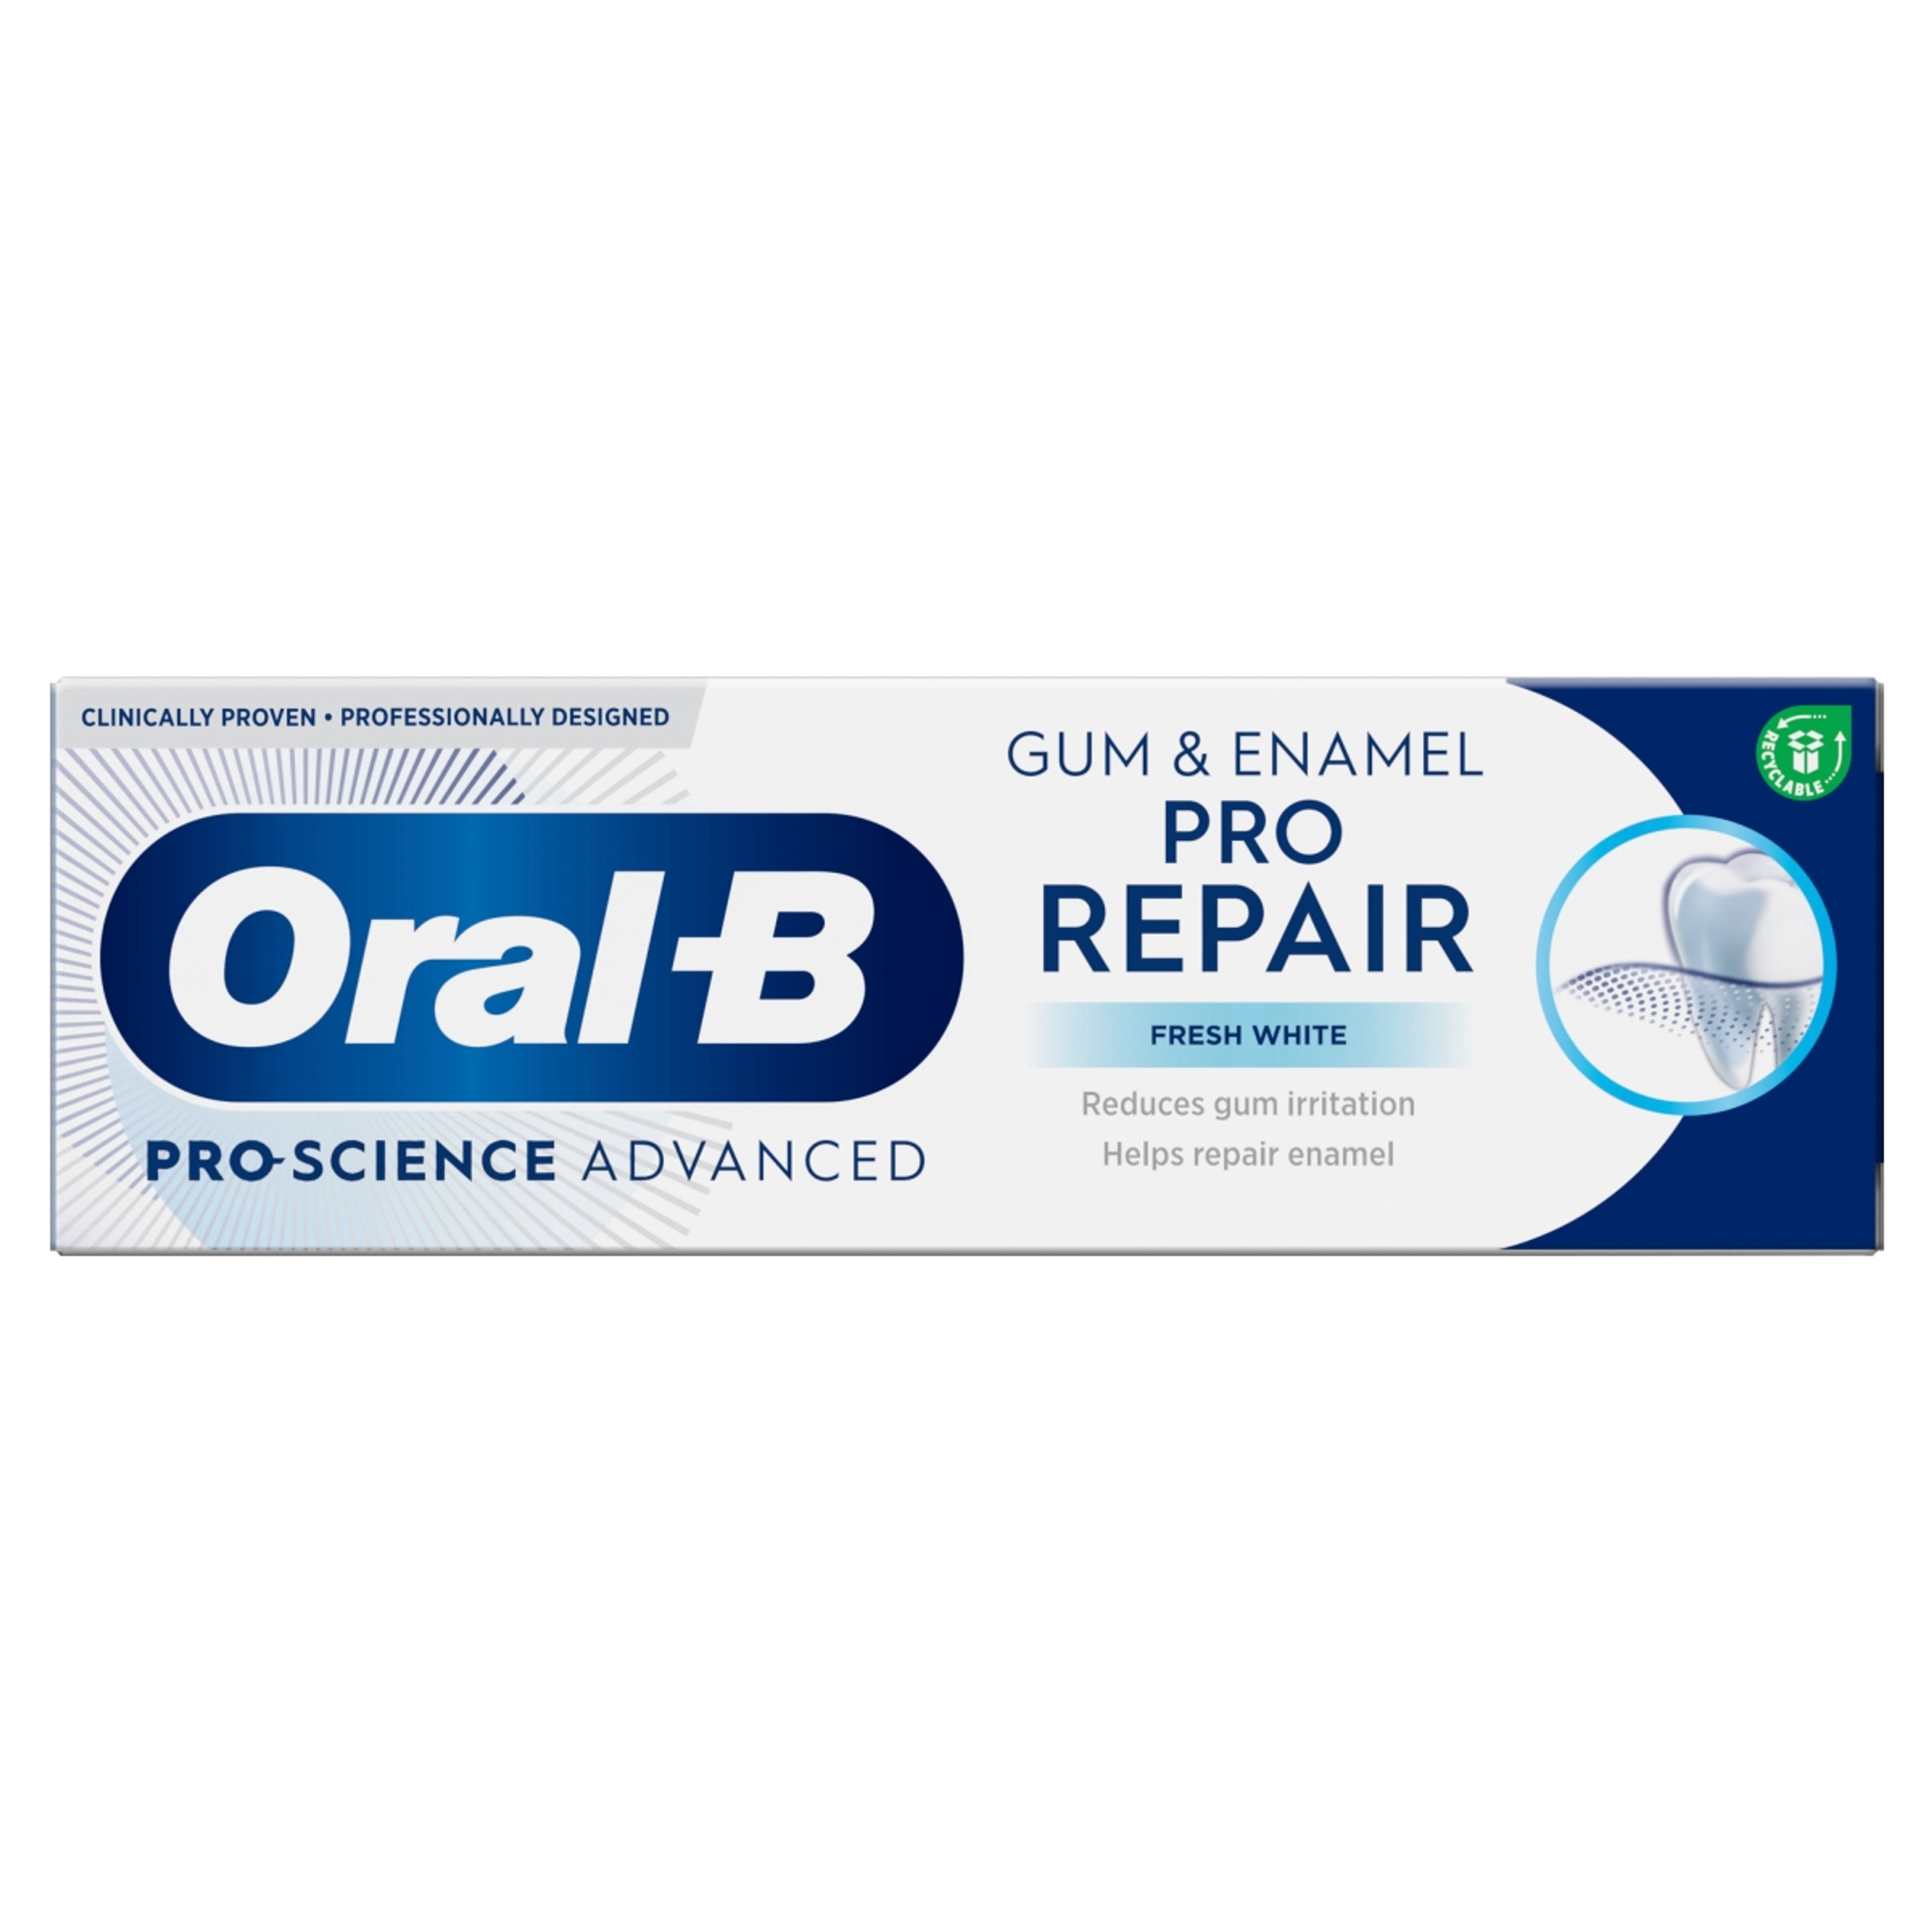 Oral-B Pro-Repair Gentle whitening fogkrém - 75 ml-1